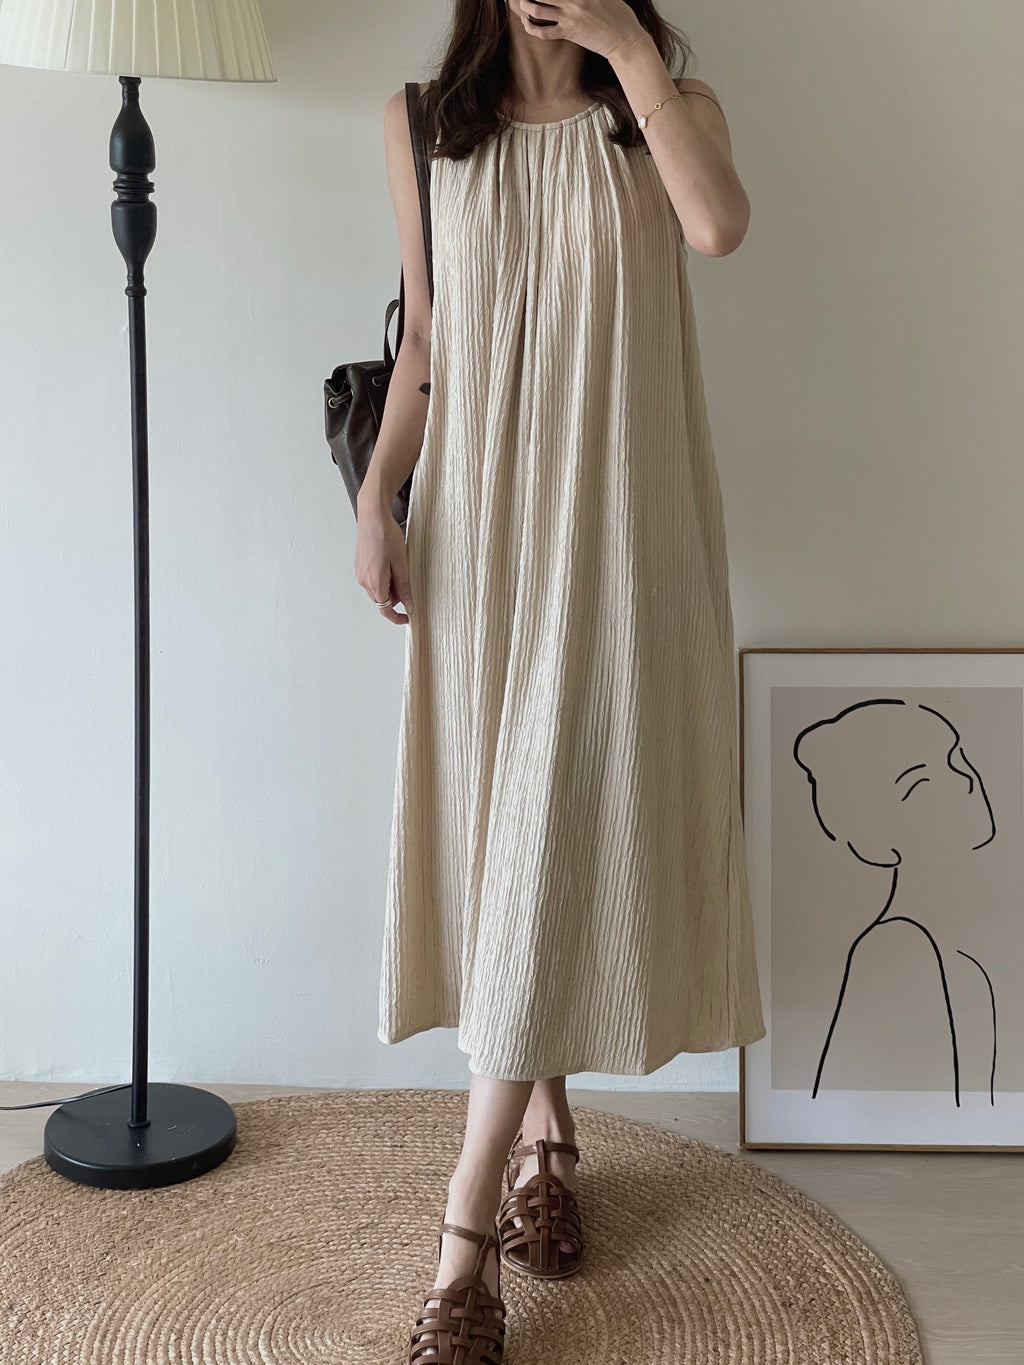 Alovie Crumpled Dress / 垂直宽松压褶度假裙